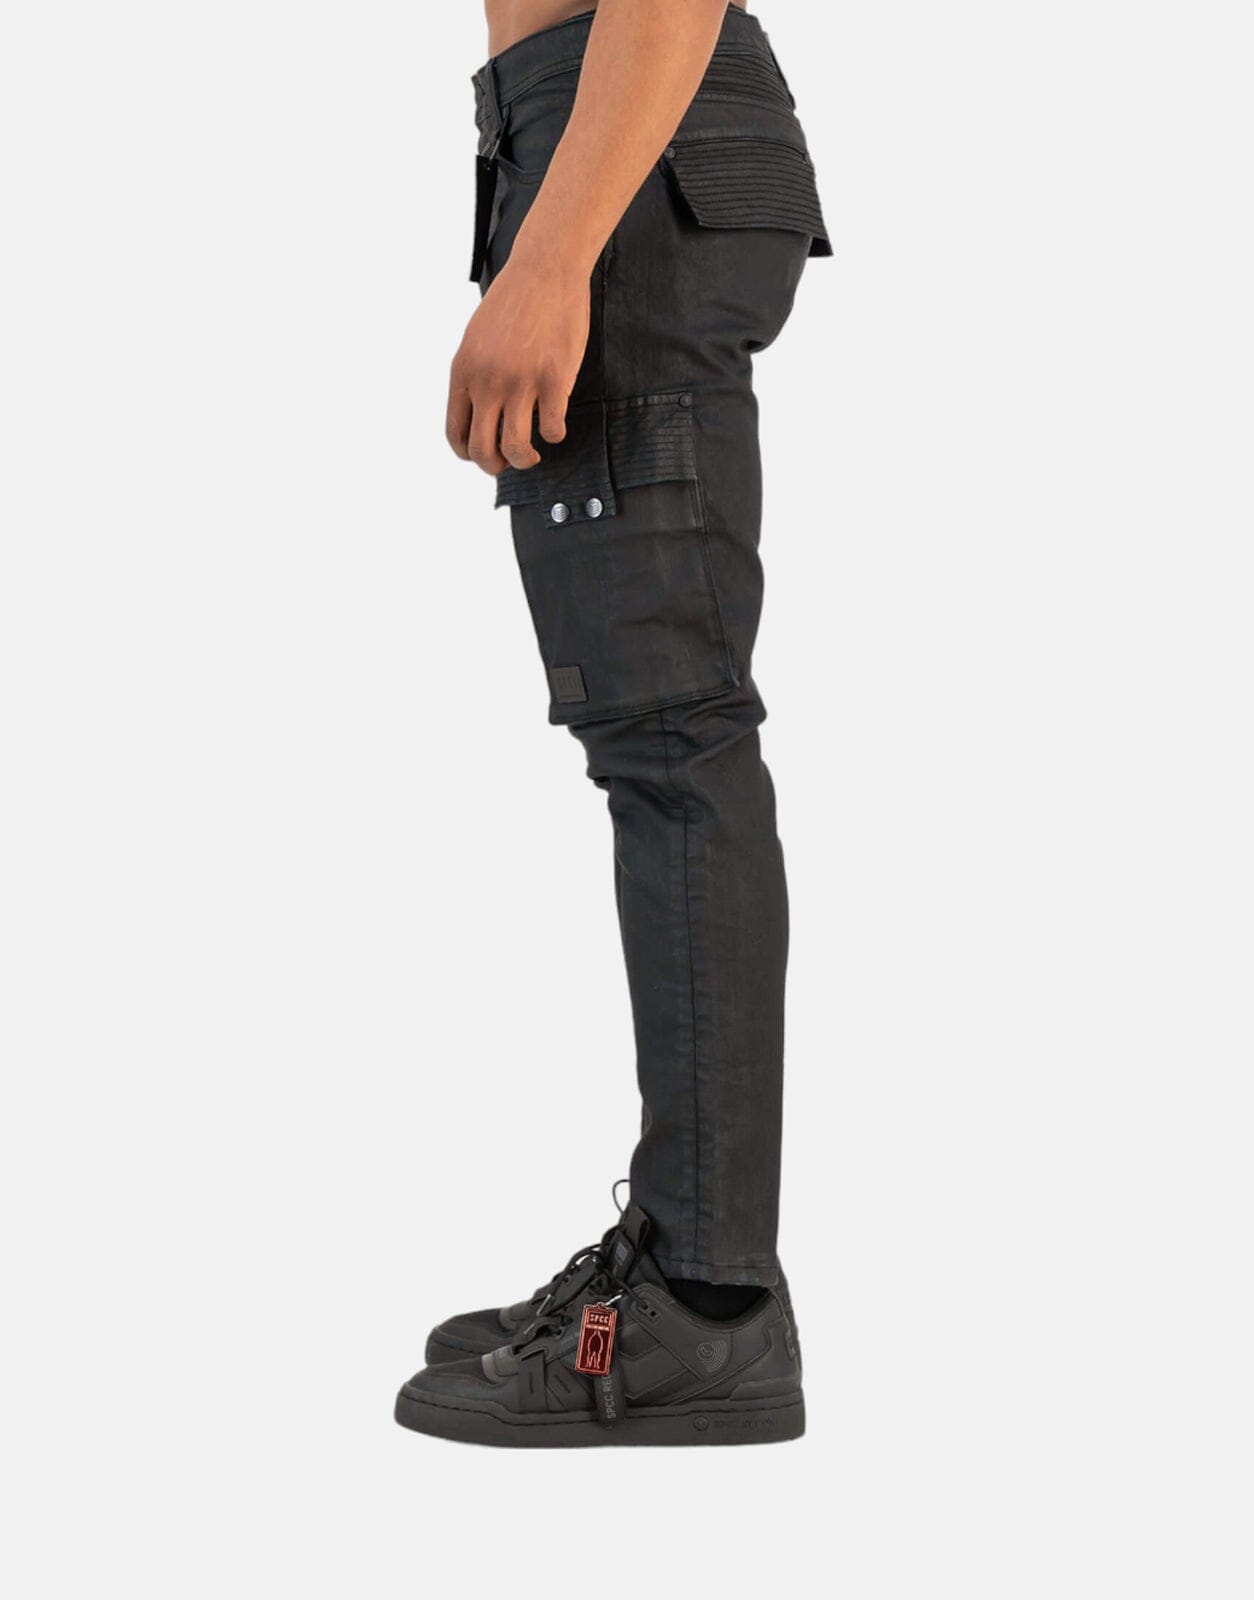 SPCC Tanaka Black Jeans - Subwear